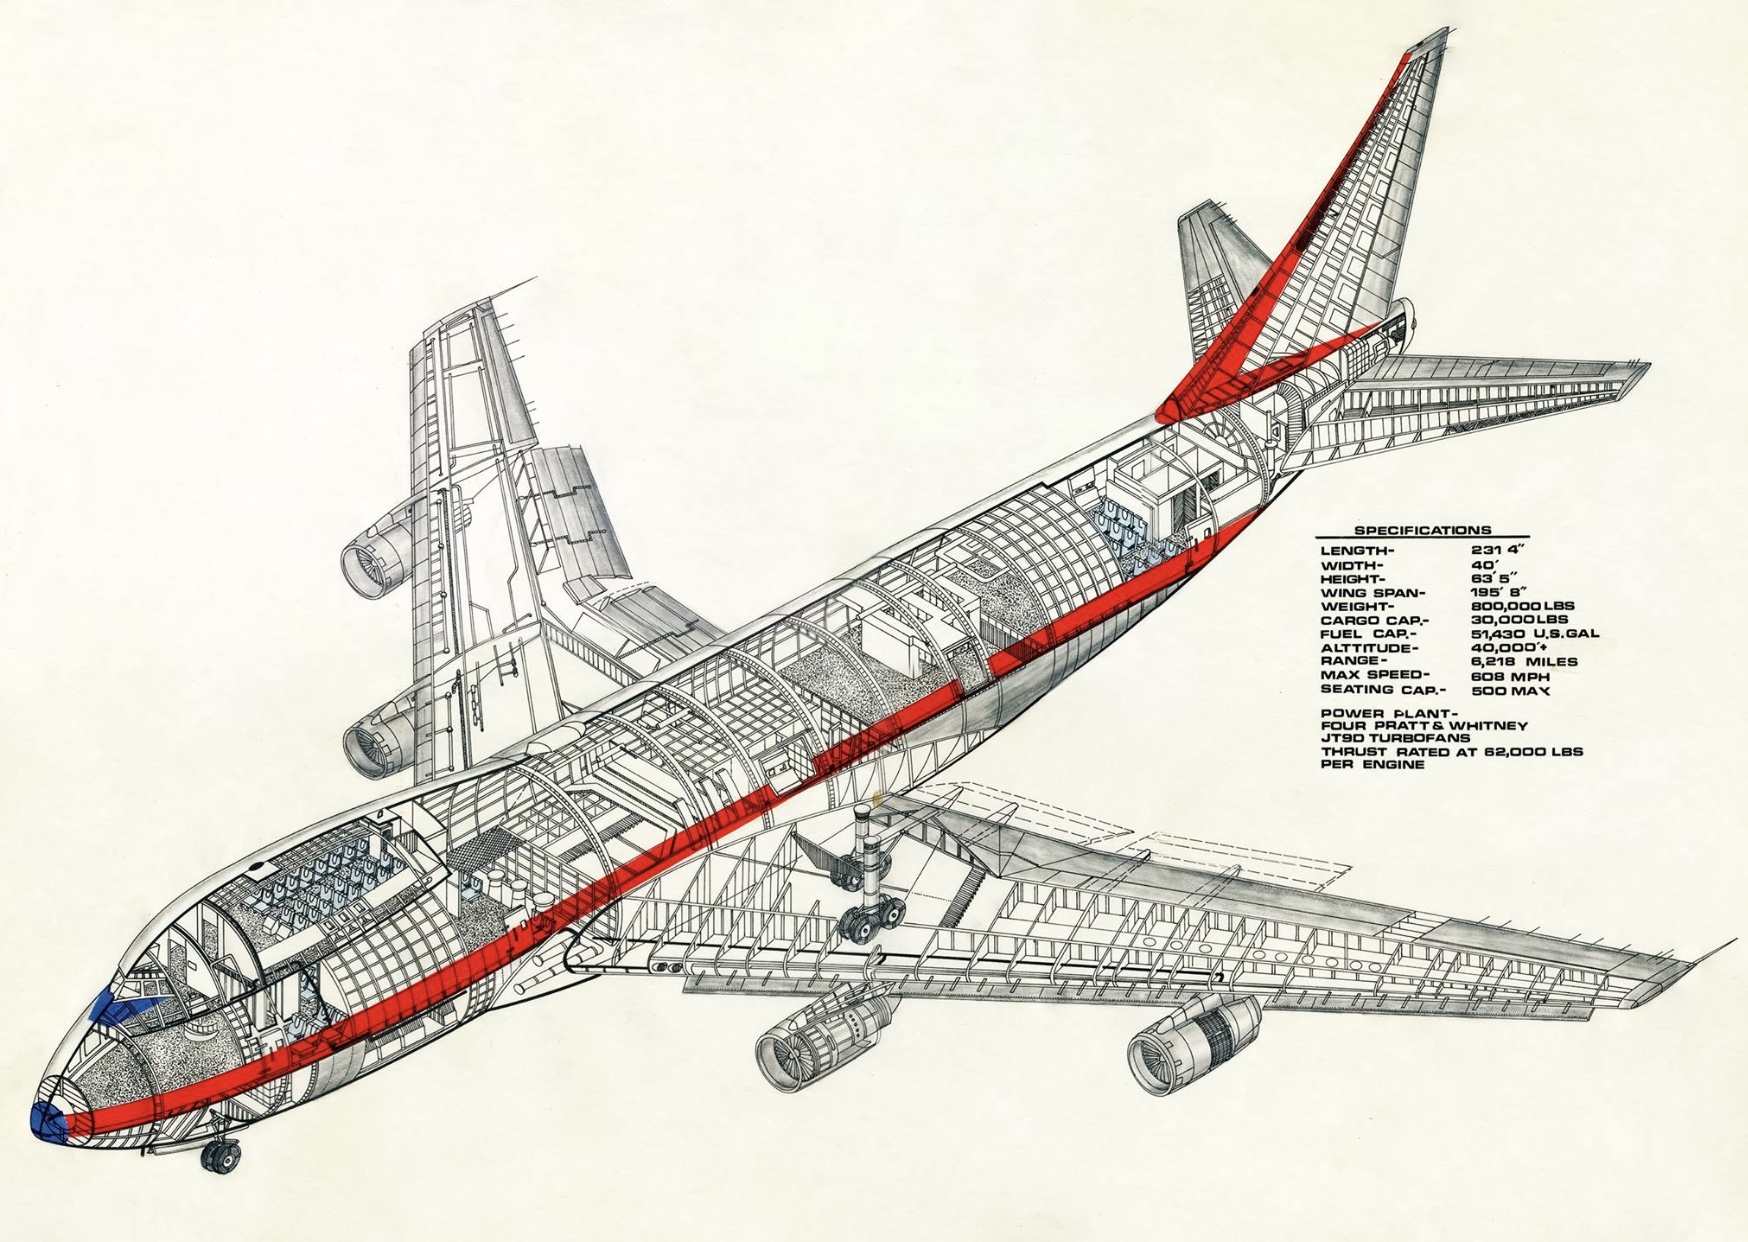 [DIAGRAM] Boeing 747 Wiring Diagram - MYDIAGRAM.ONLINE